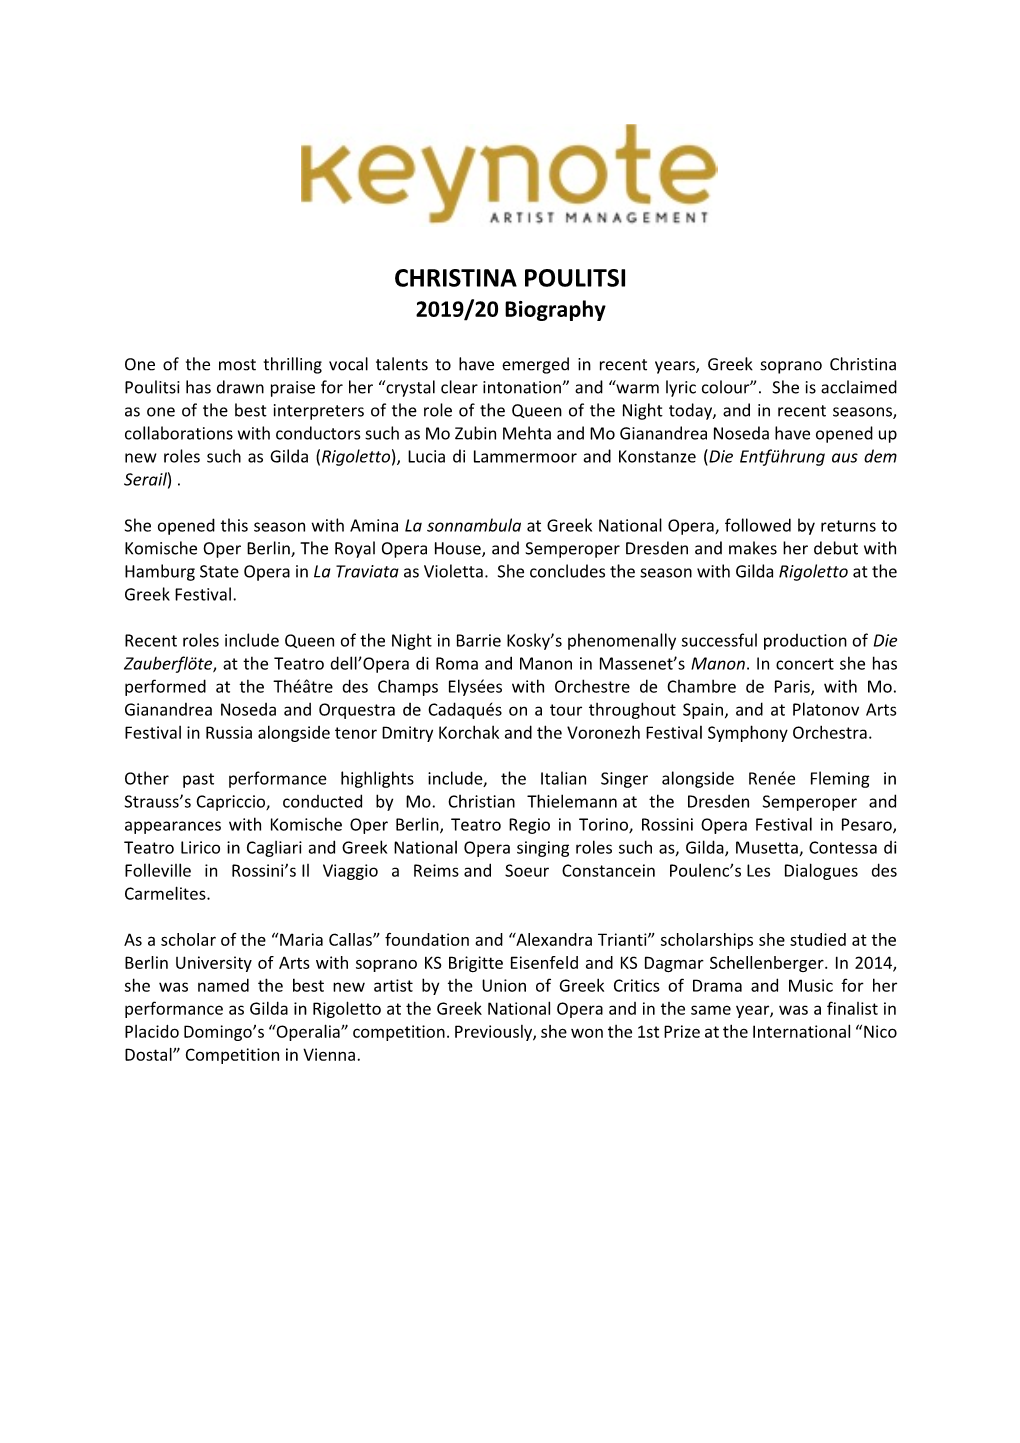 CHRISTINA POULITSI 2019/20 Biography